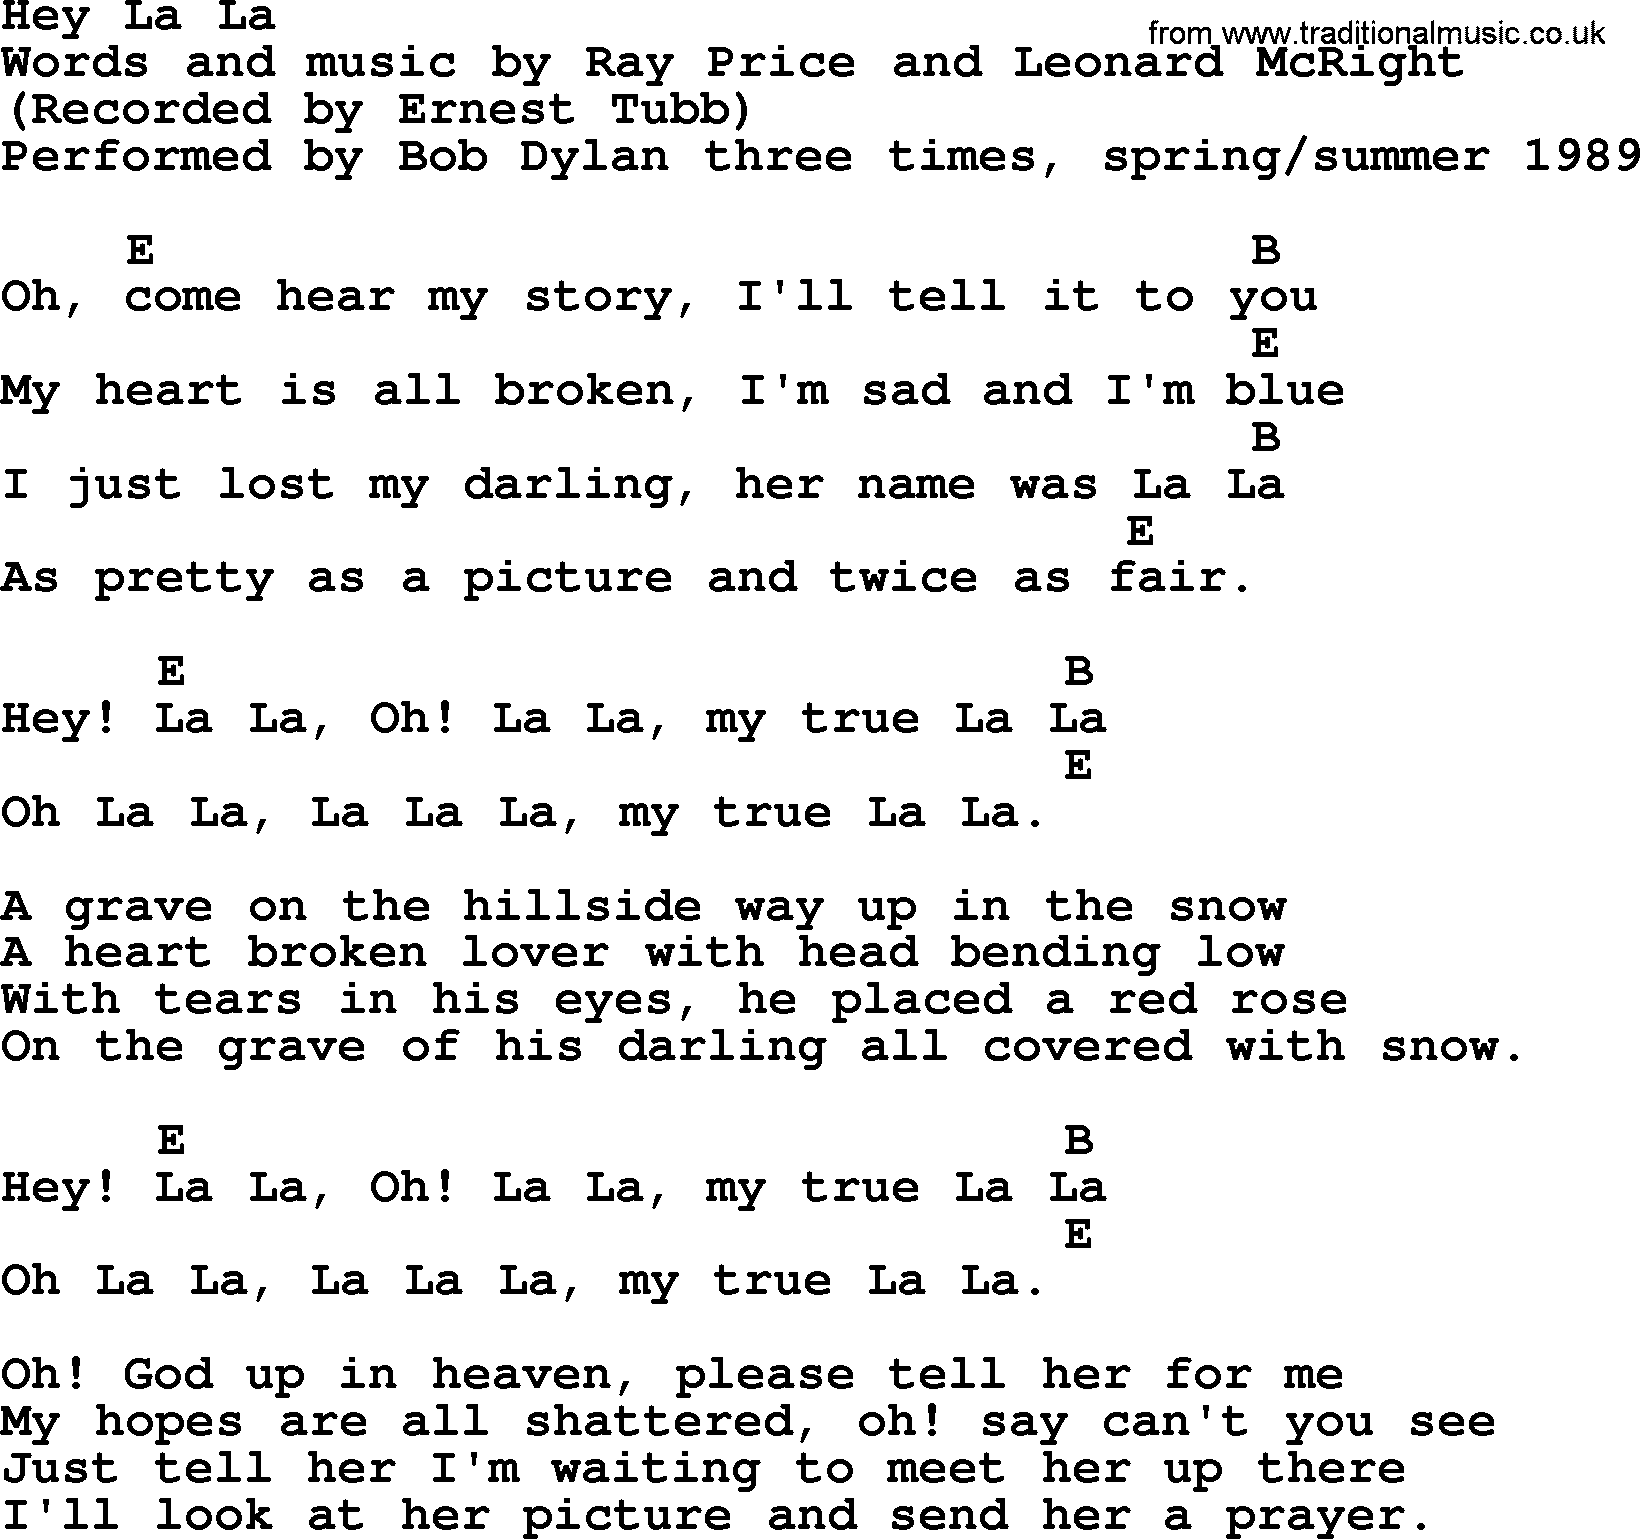 Bob Dylan song, lyrics with chords - Hey La La